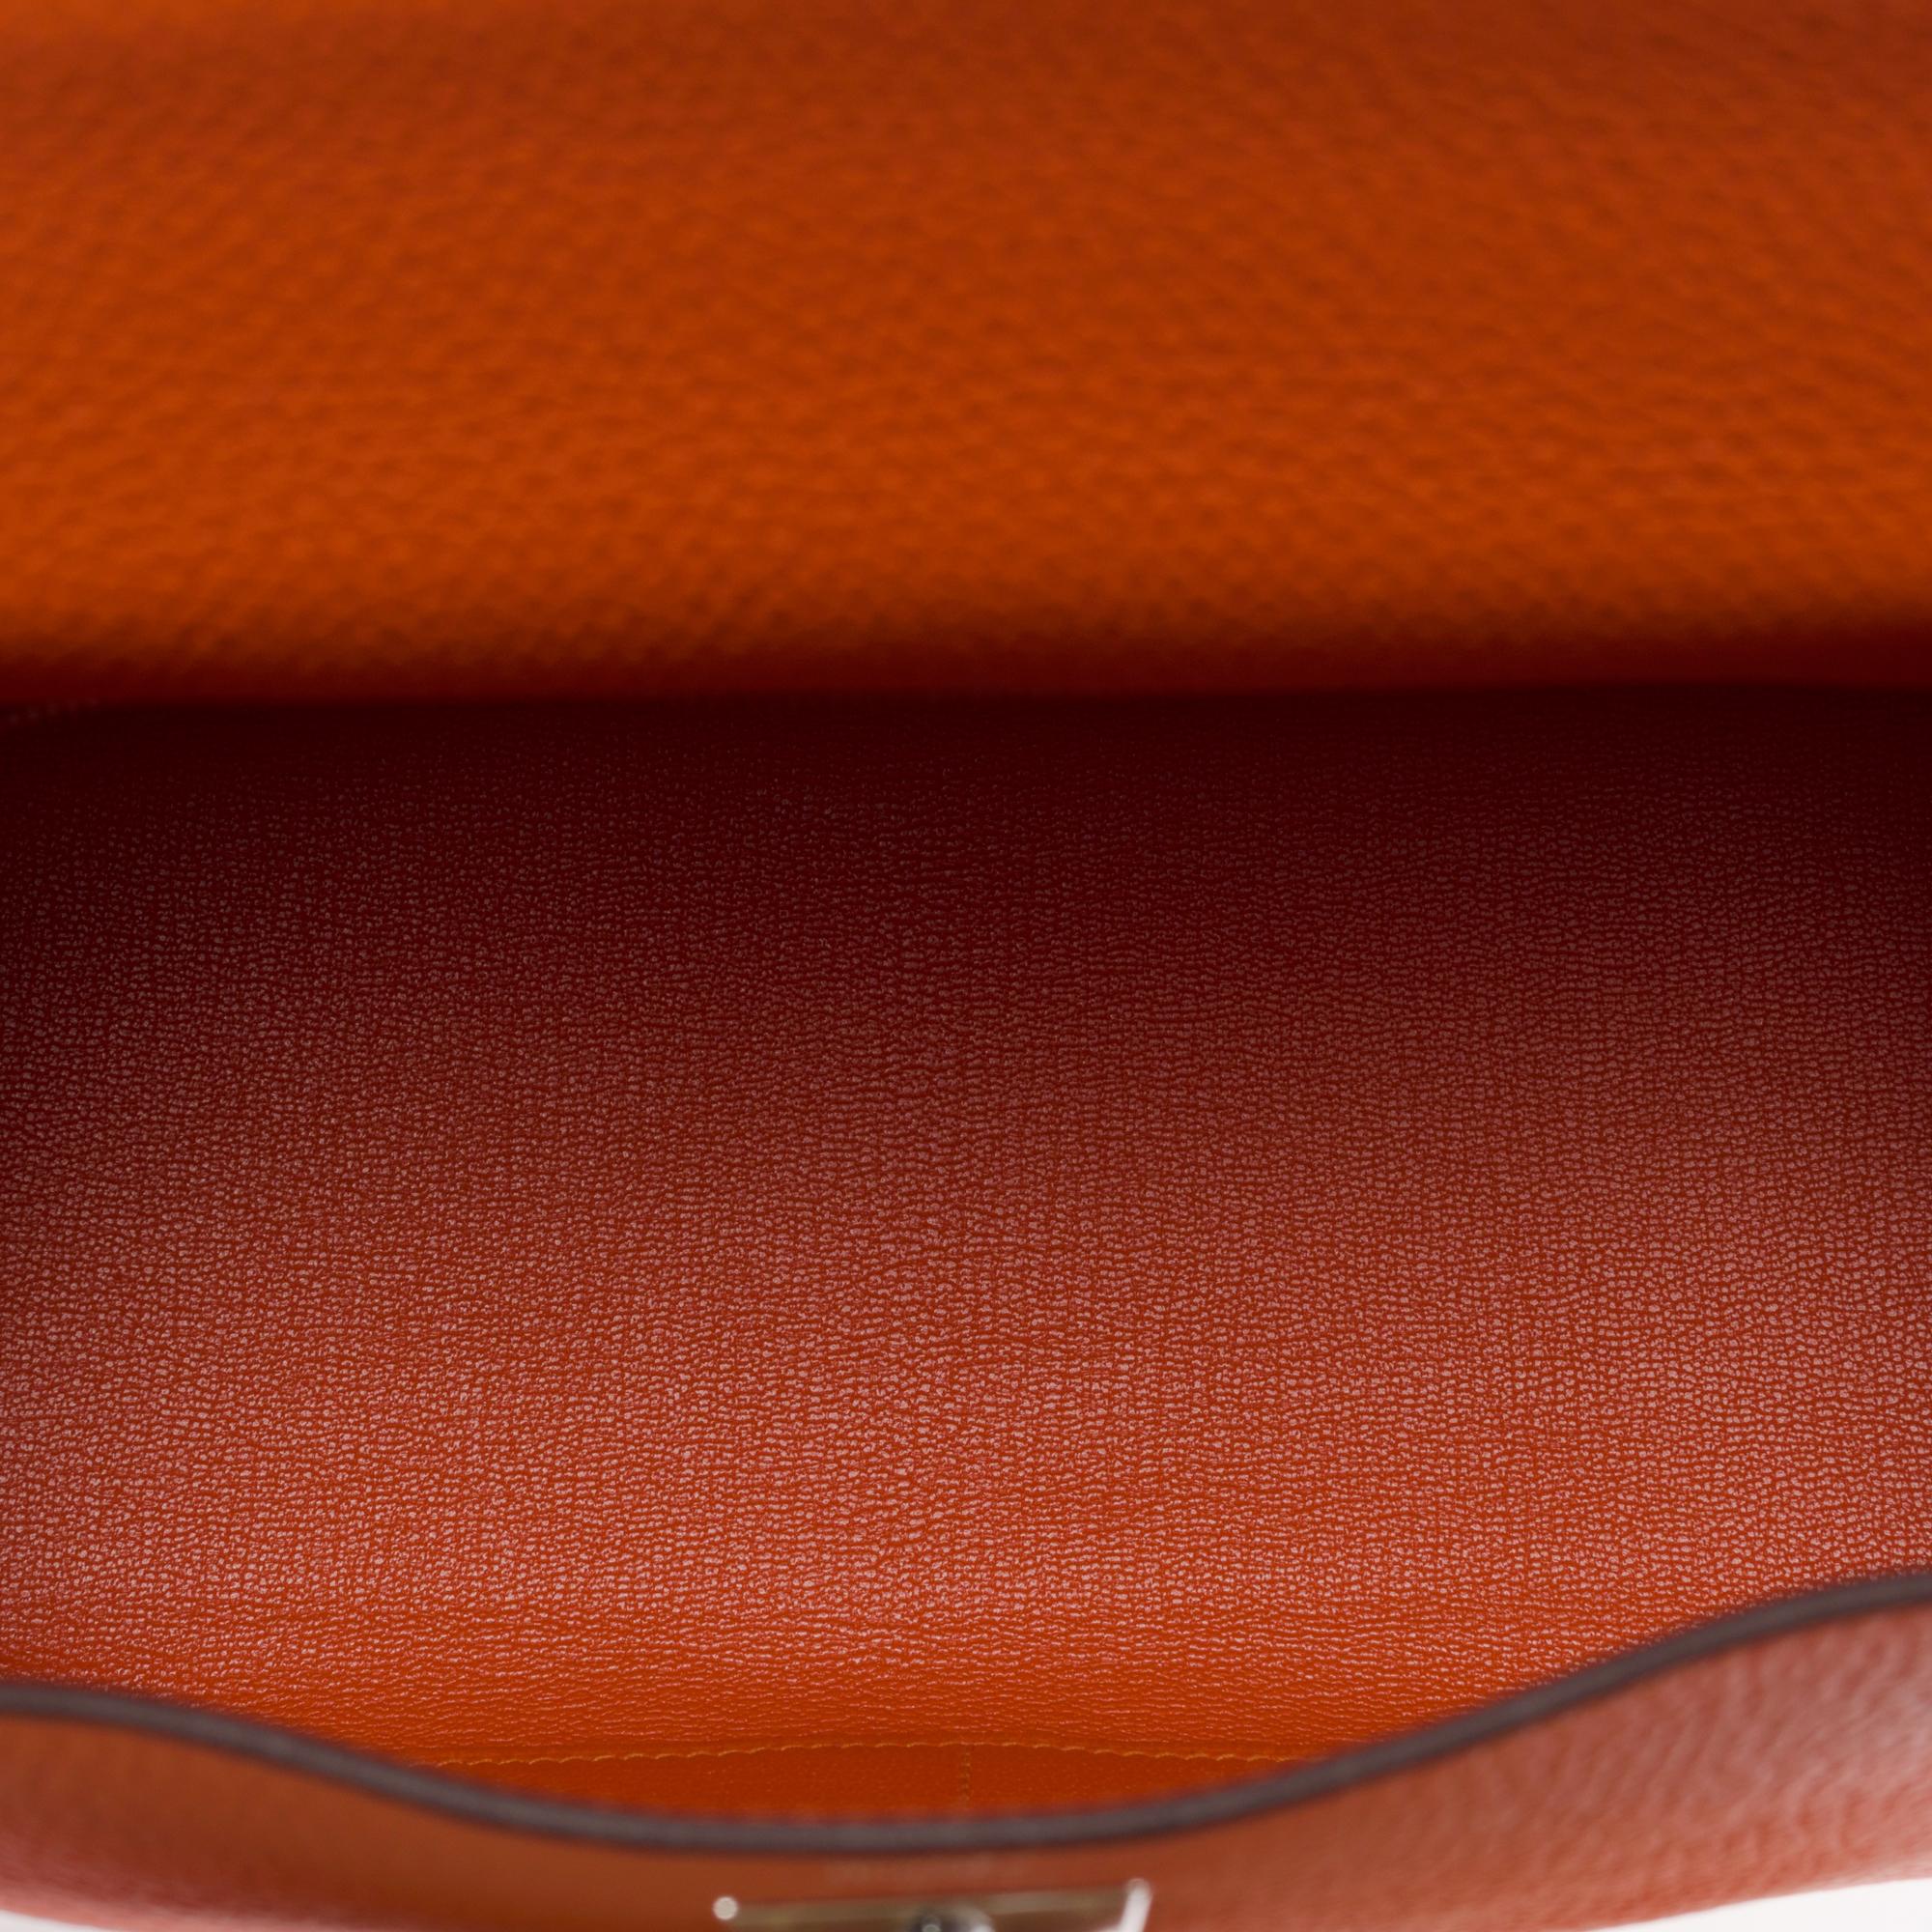 New Amazing Hermes Kelly 28 retourne handbag strap in Orange Feu leather, SHW For Sale 4